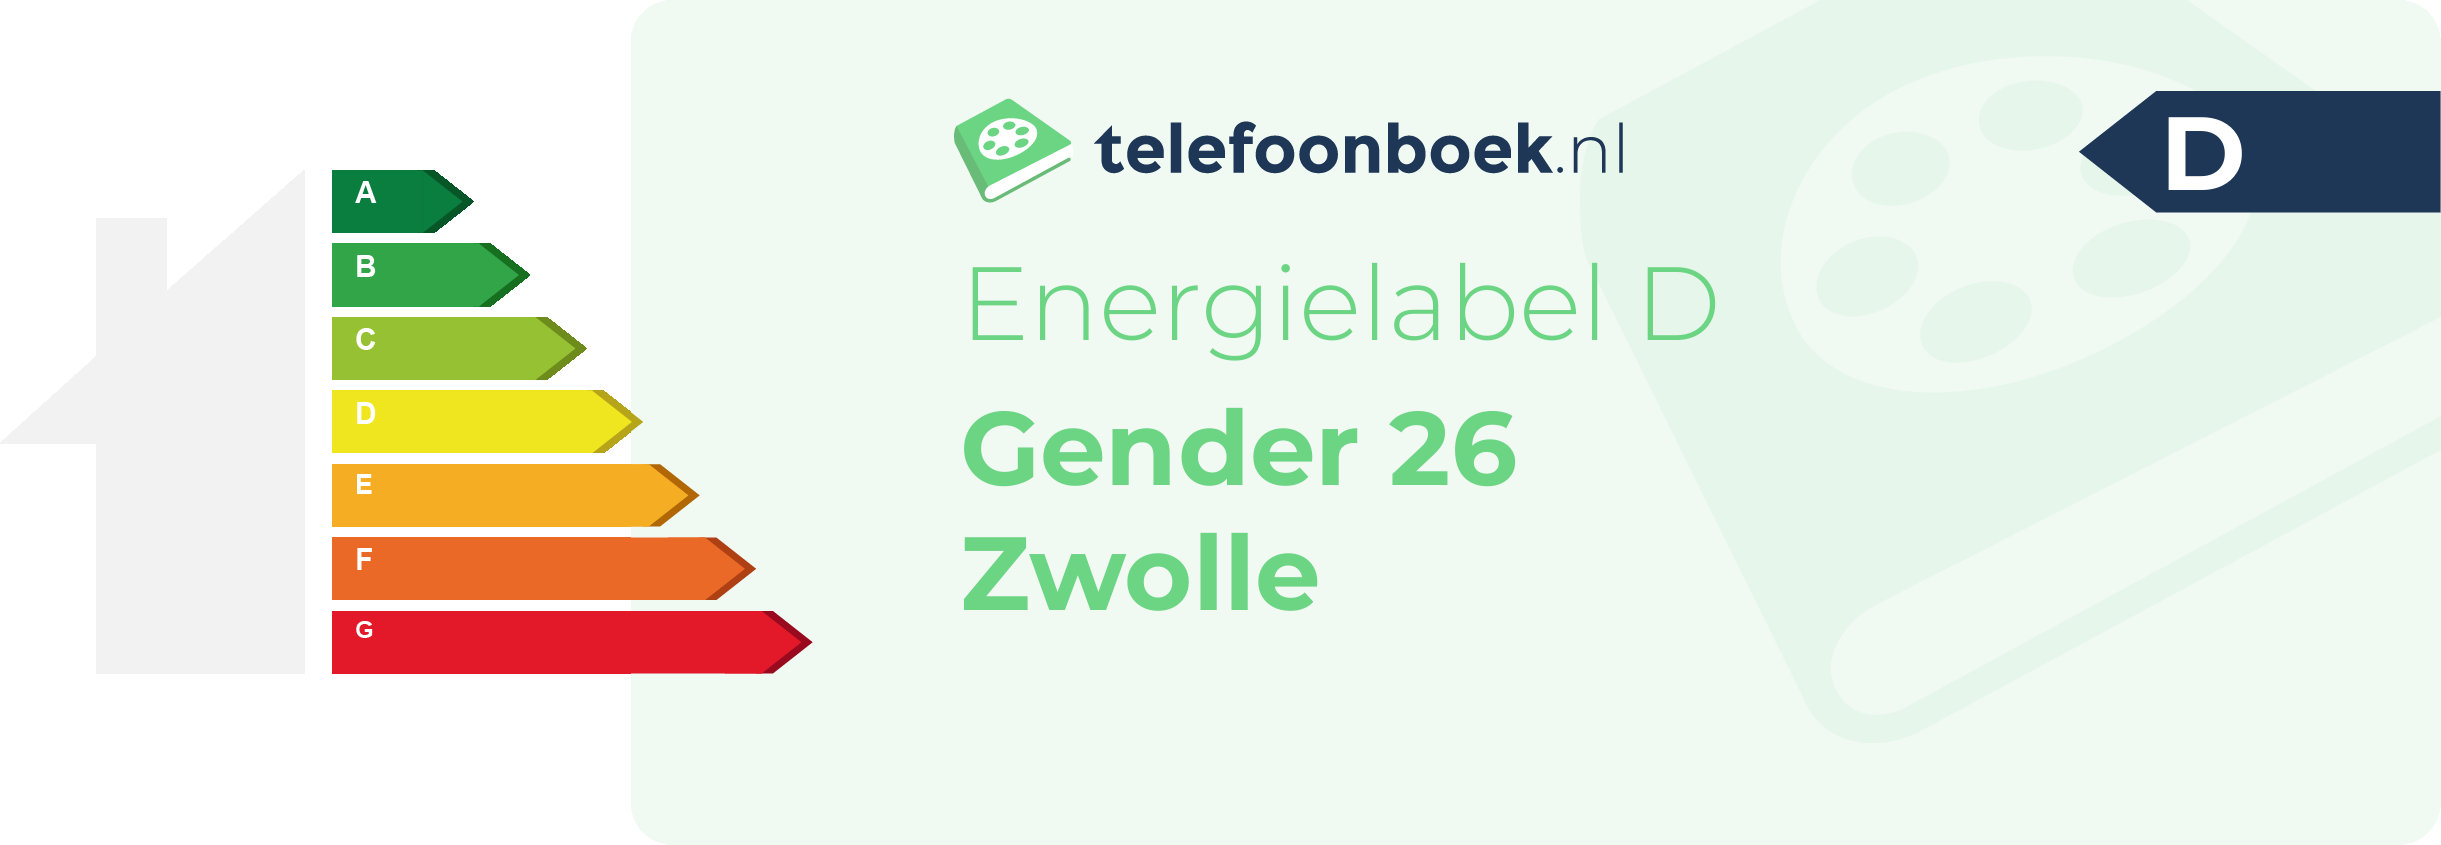 Energielabel Gender 26 Zwolle